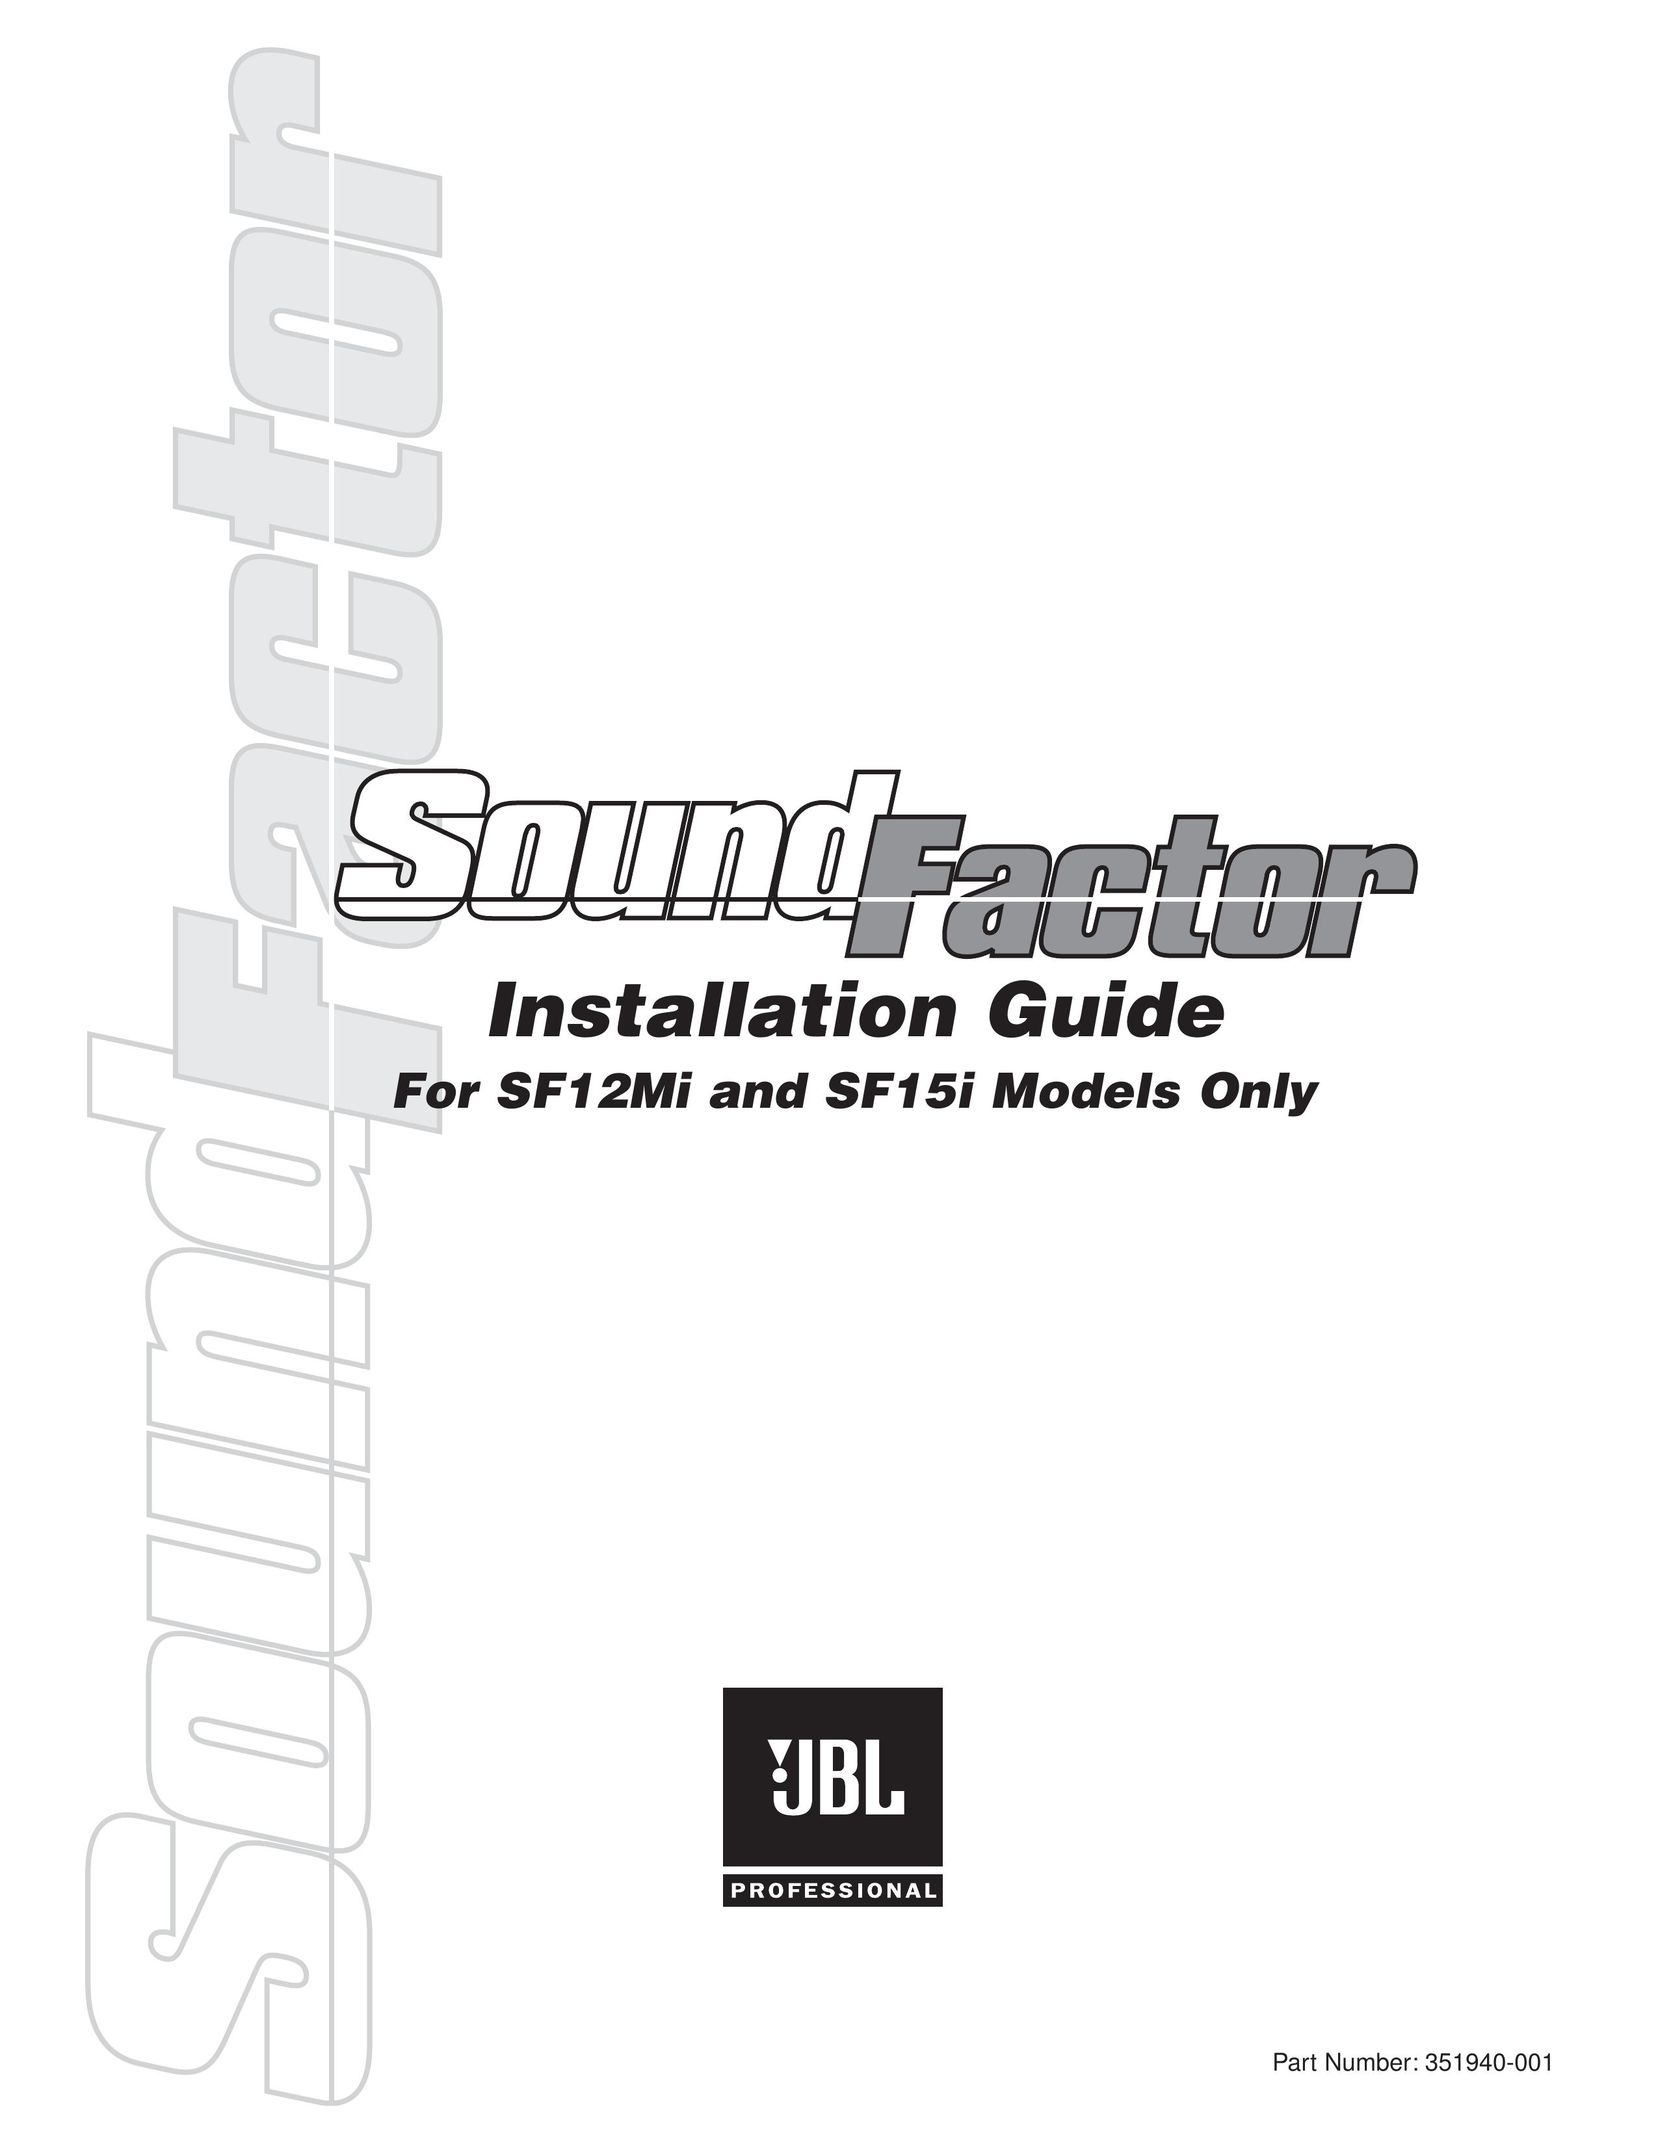 JBL Professional SF12Mi Speaker User Manual